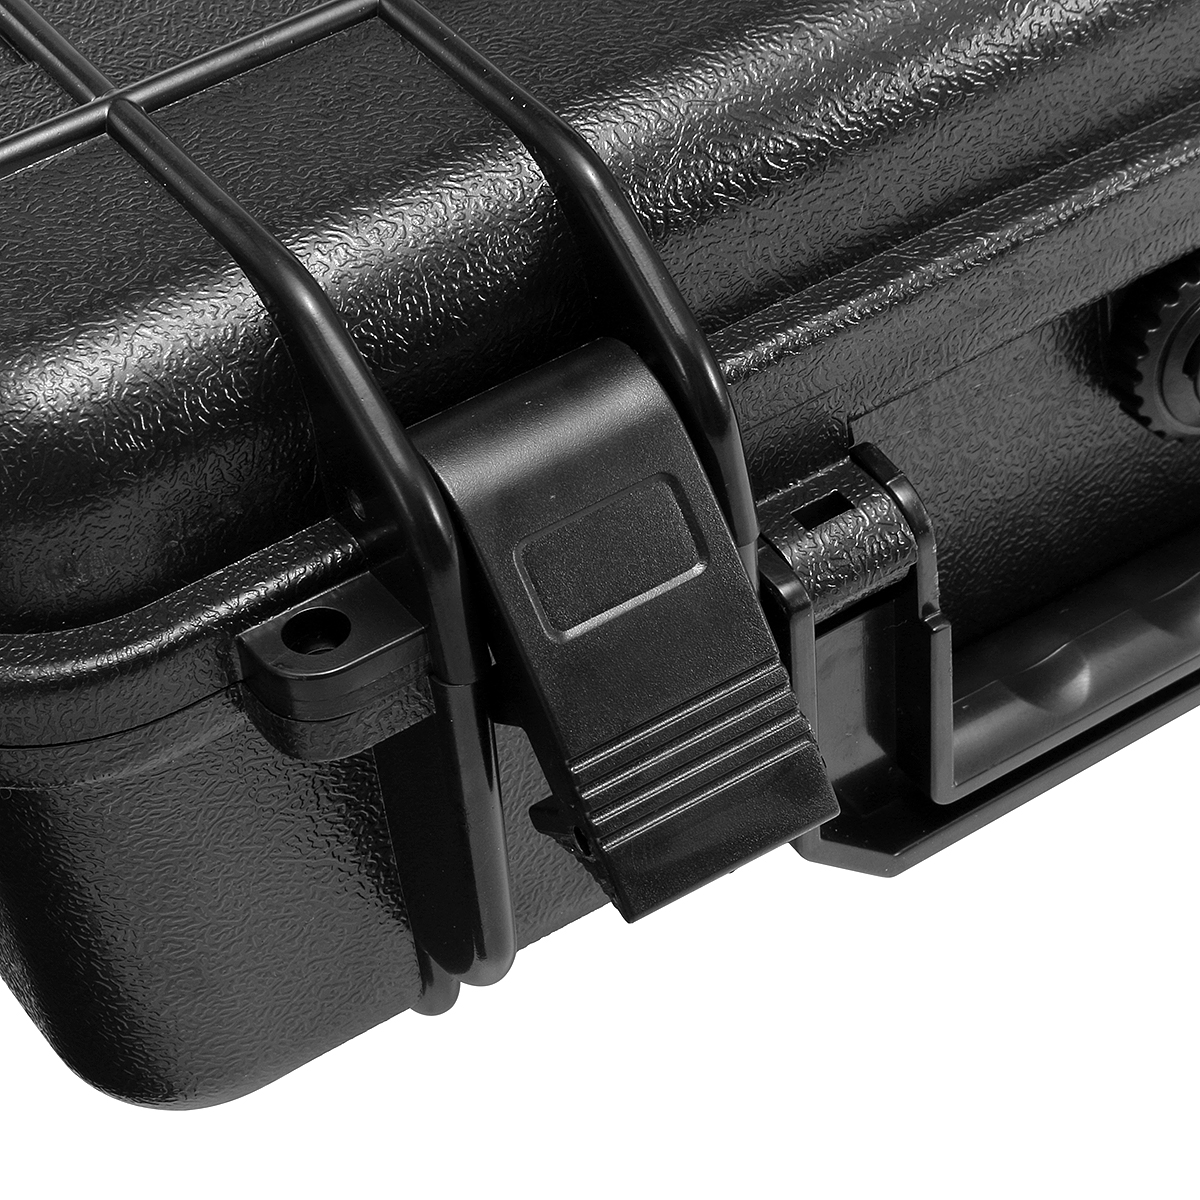 Waterproof-Hard-Carry-Case-Tool-Box-Plastic-Equipment-Protective-Storage-Box-1301589-8